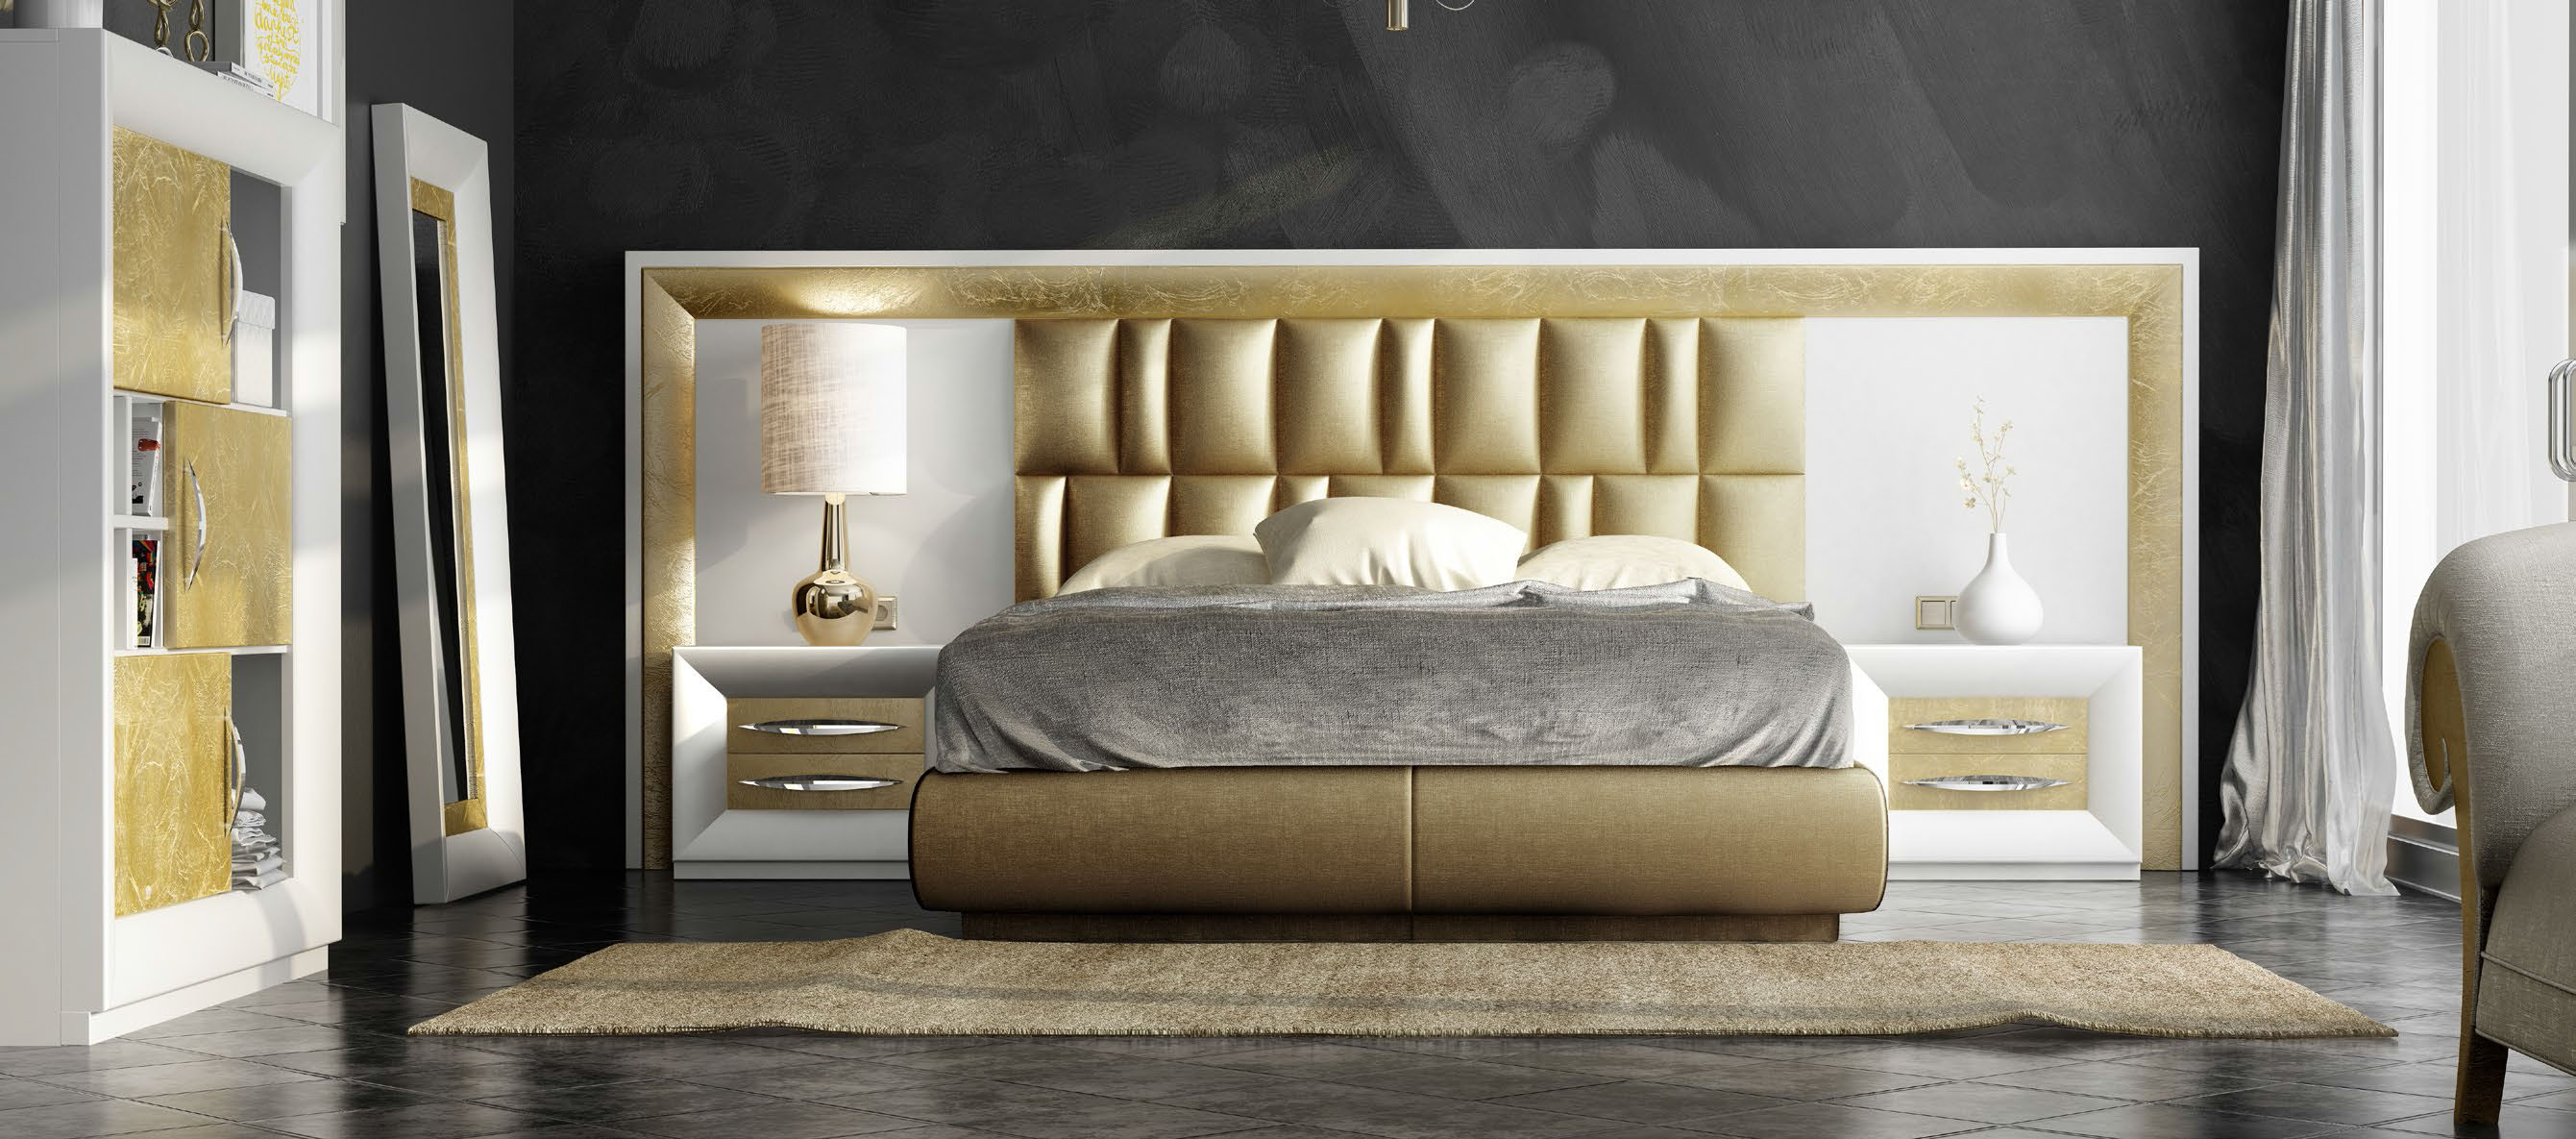 Bedroom Furniture Beds with storage DOR 136